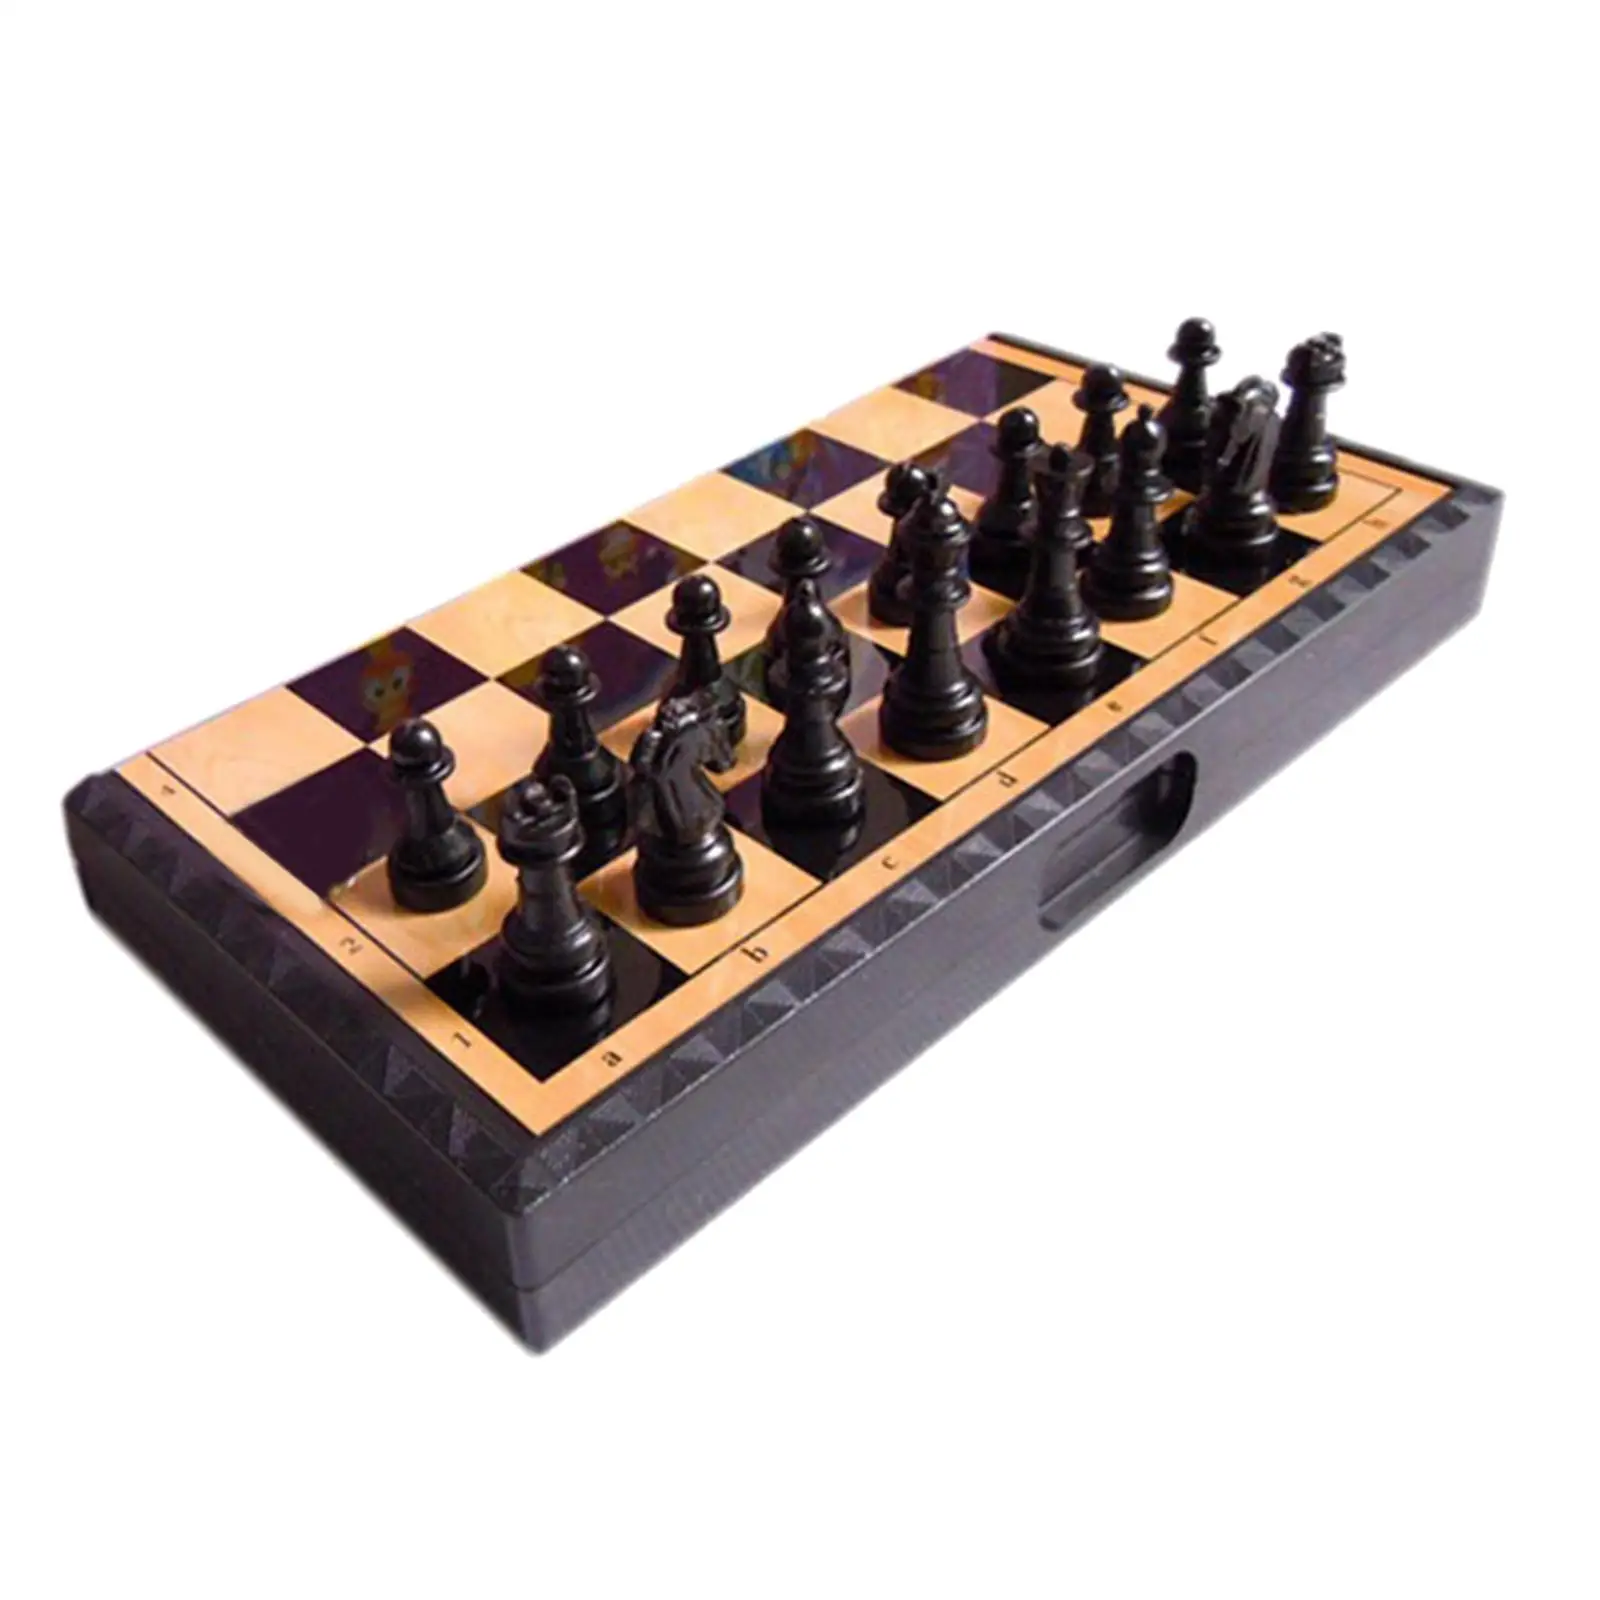 Jogo de xadrez para iniciantes, jogo de xadrez magnético, conjunto